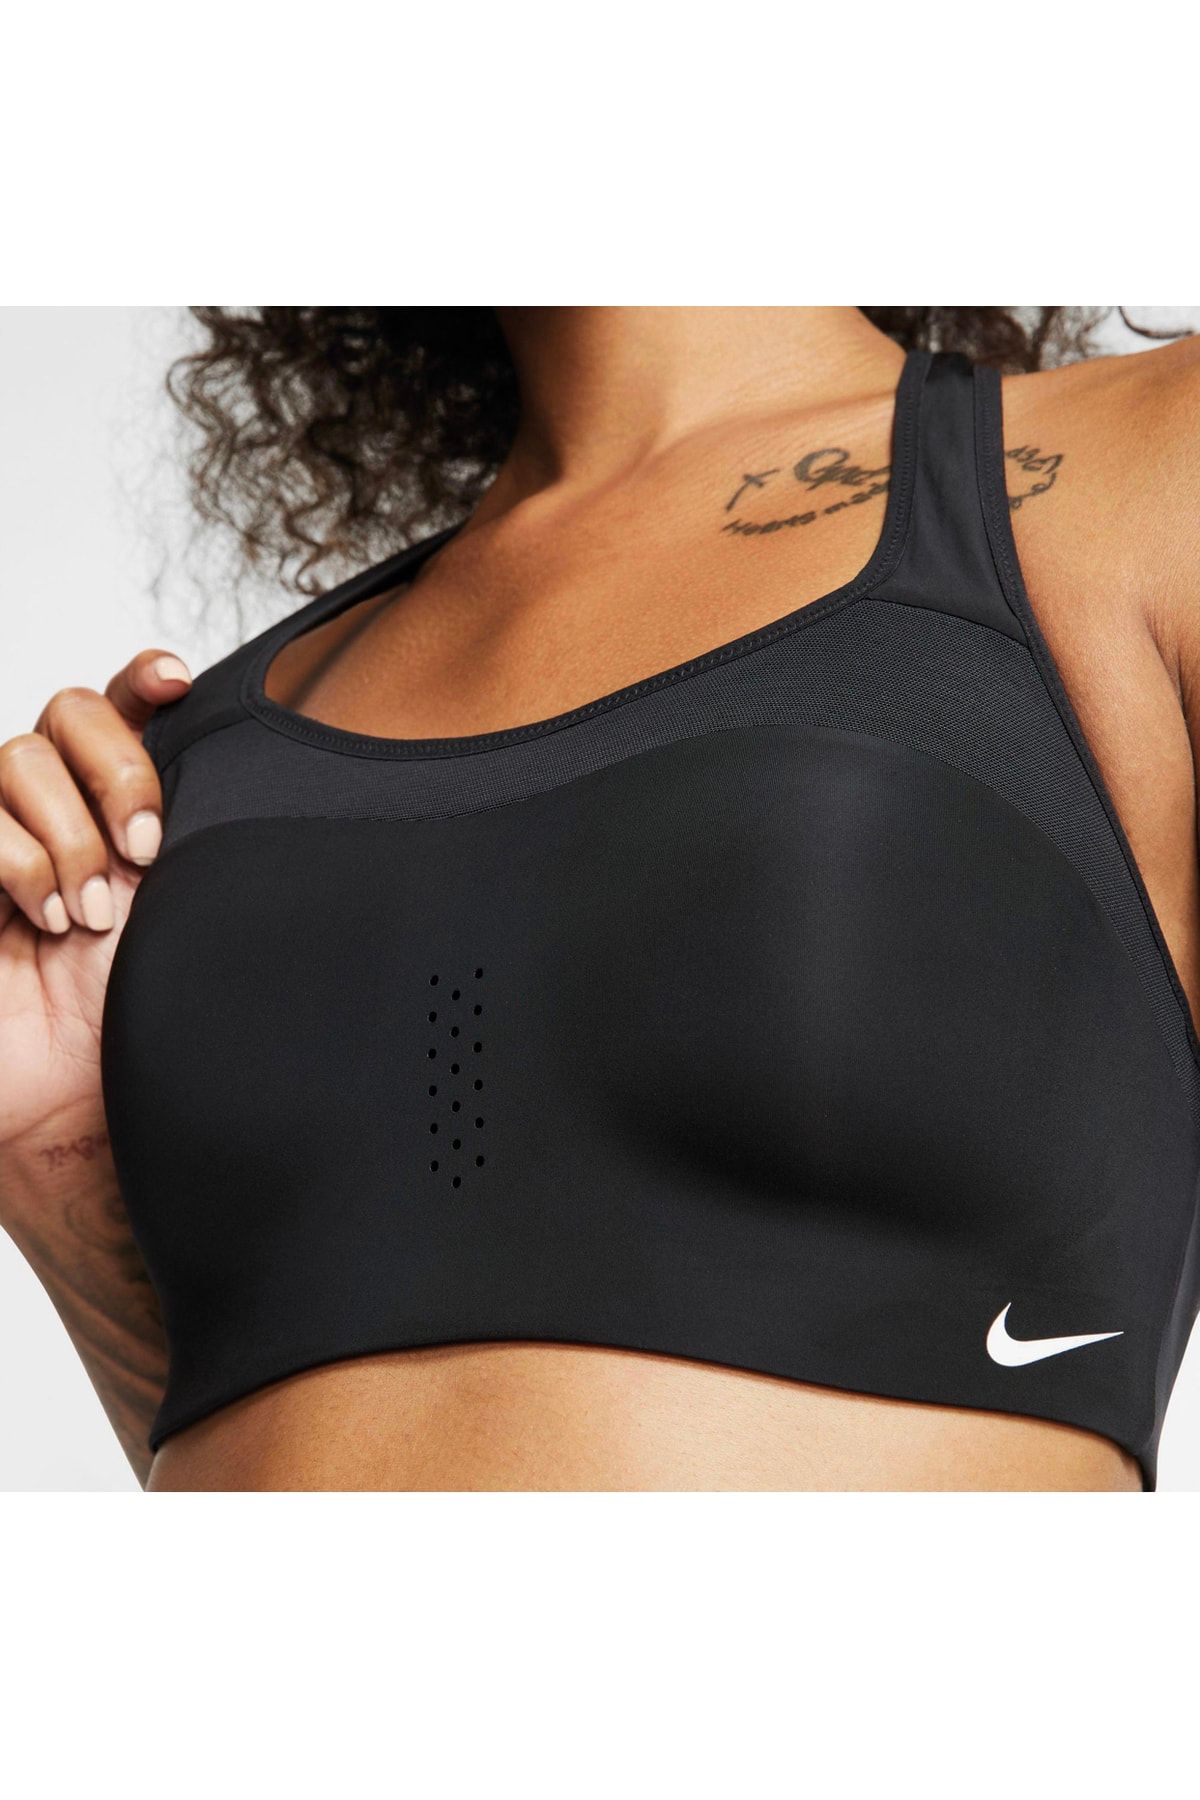 Nike Dri-fit Alpha High-support Sports Kadın Bra - Siyah Fiyatı